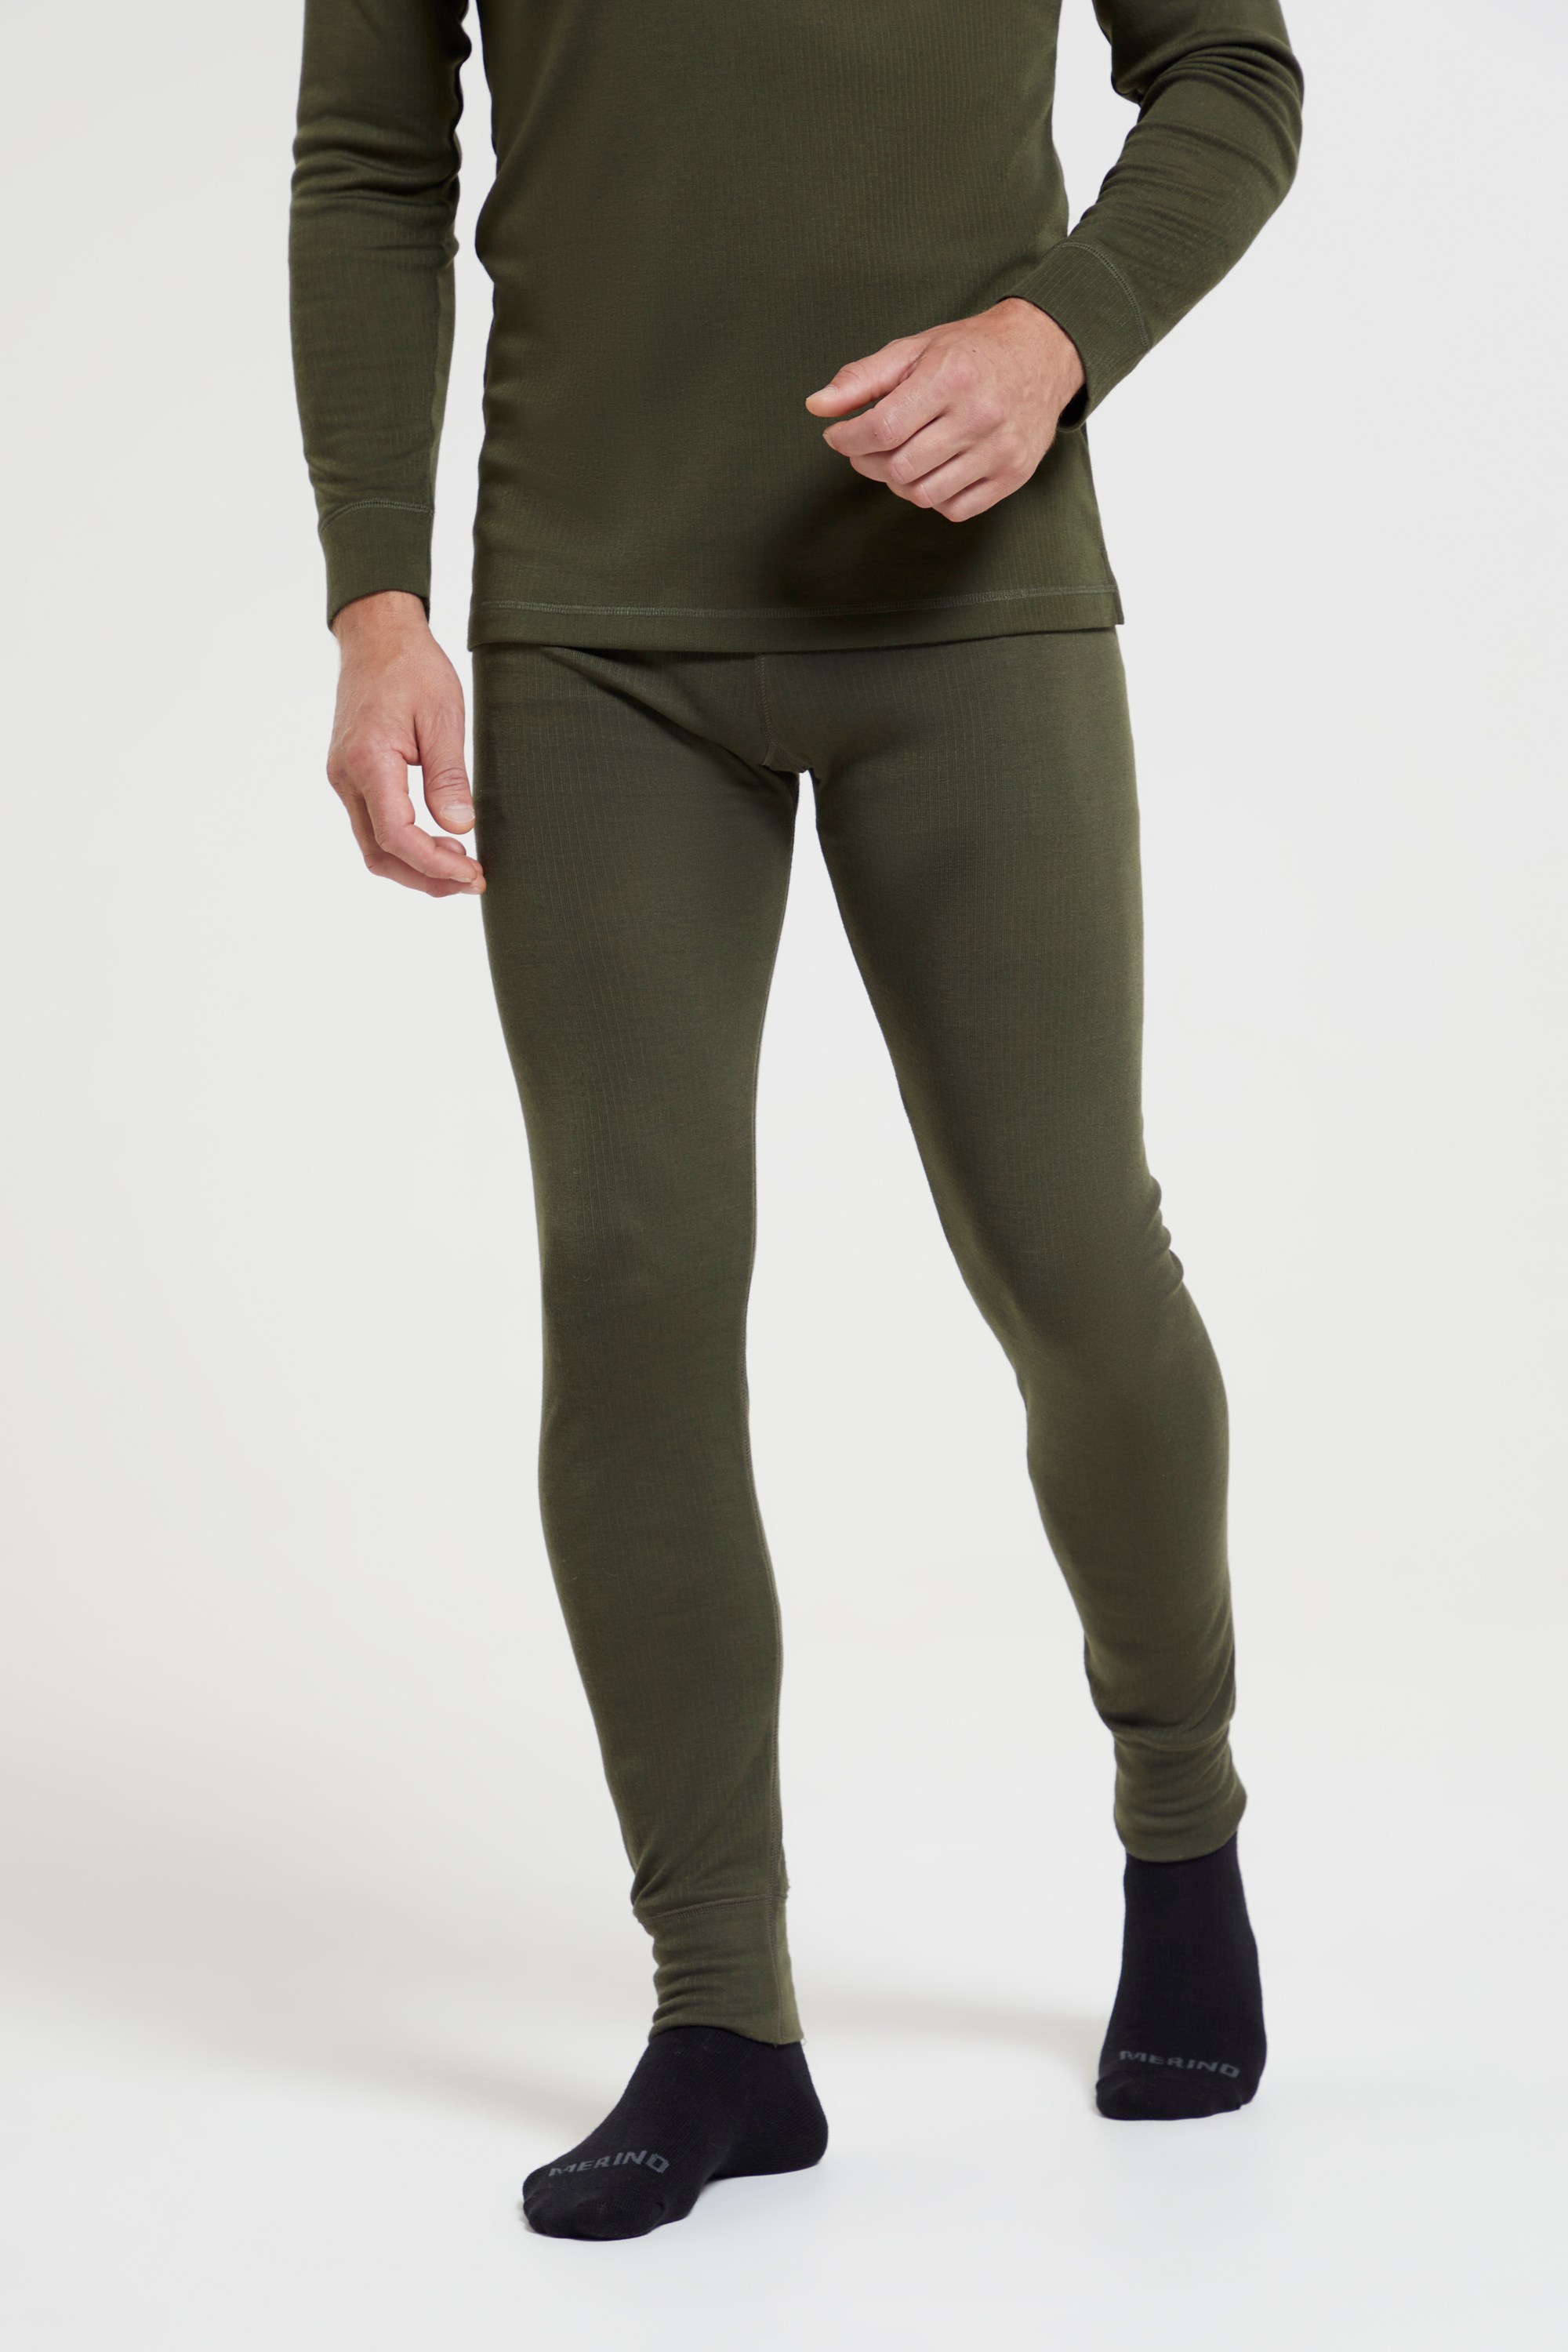 Men's Winter Thermal Underwear Bottom Long Johns Pants | Soft Base Layer  Leggings Tights